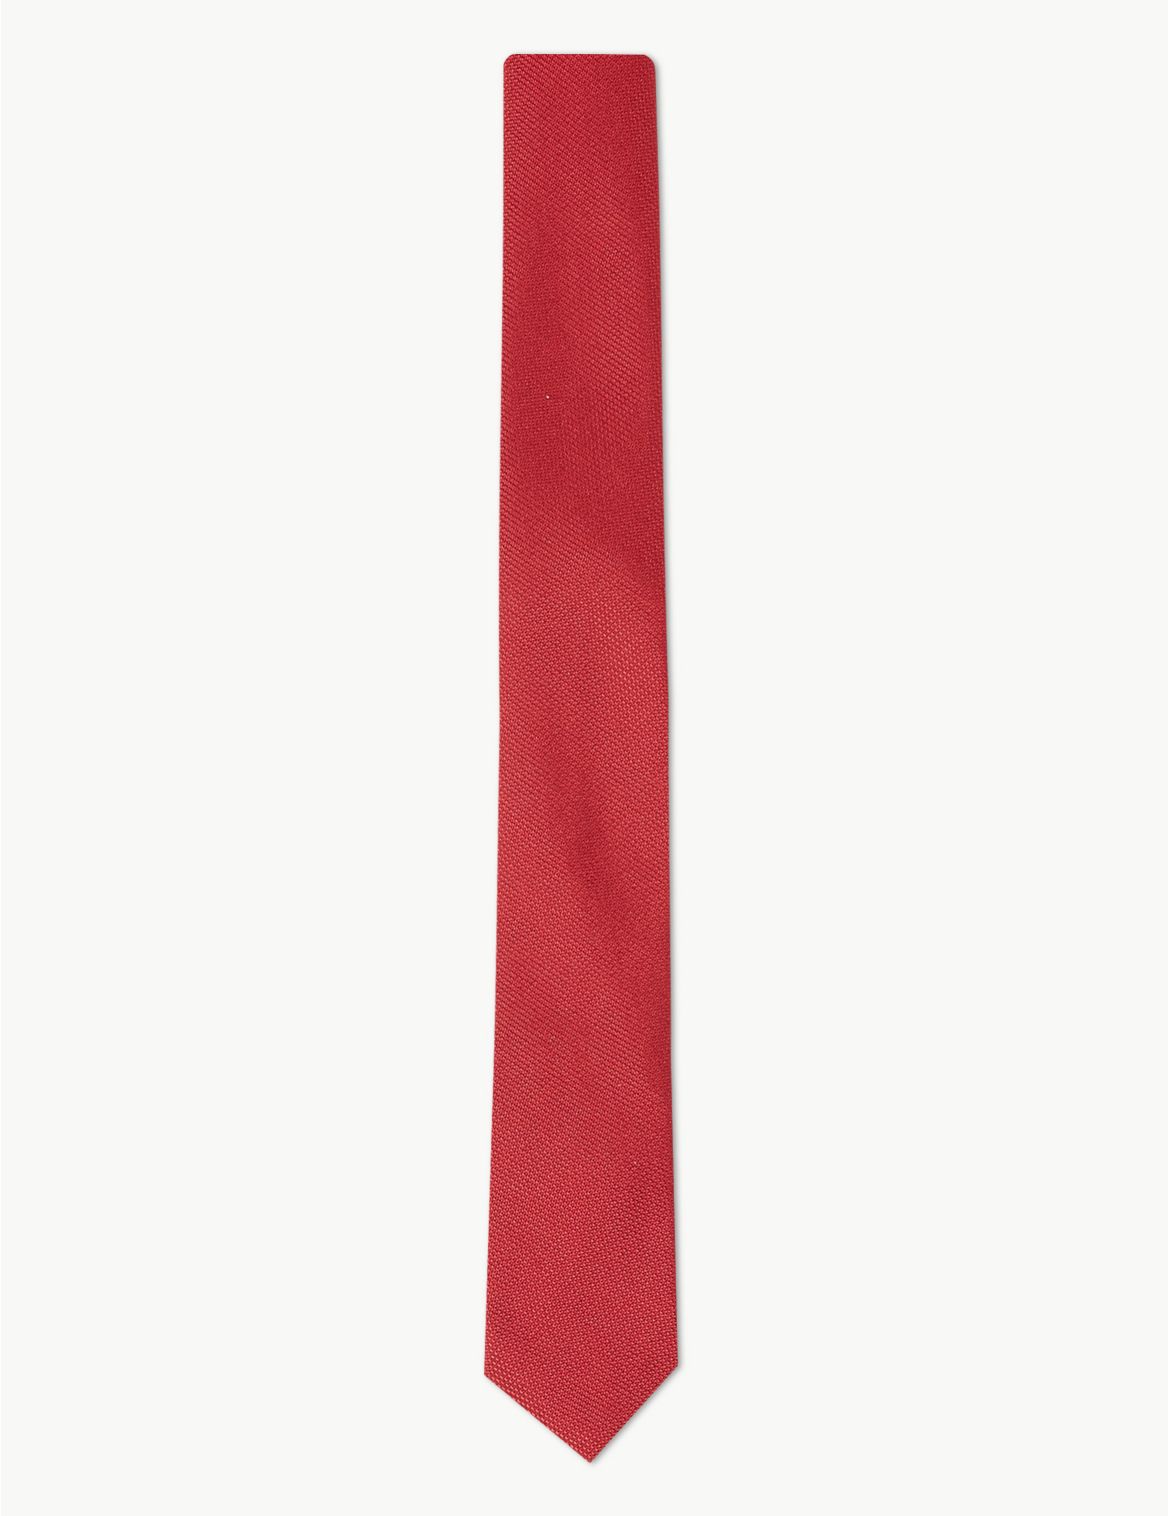 Skinny Textured Tie red